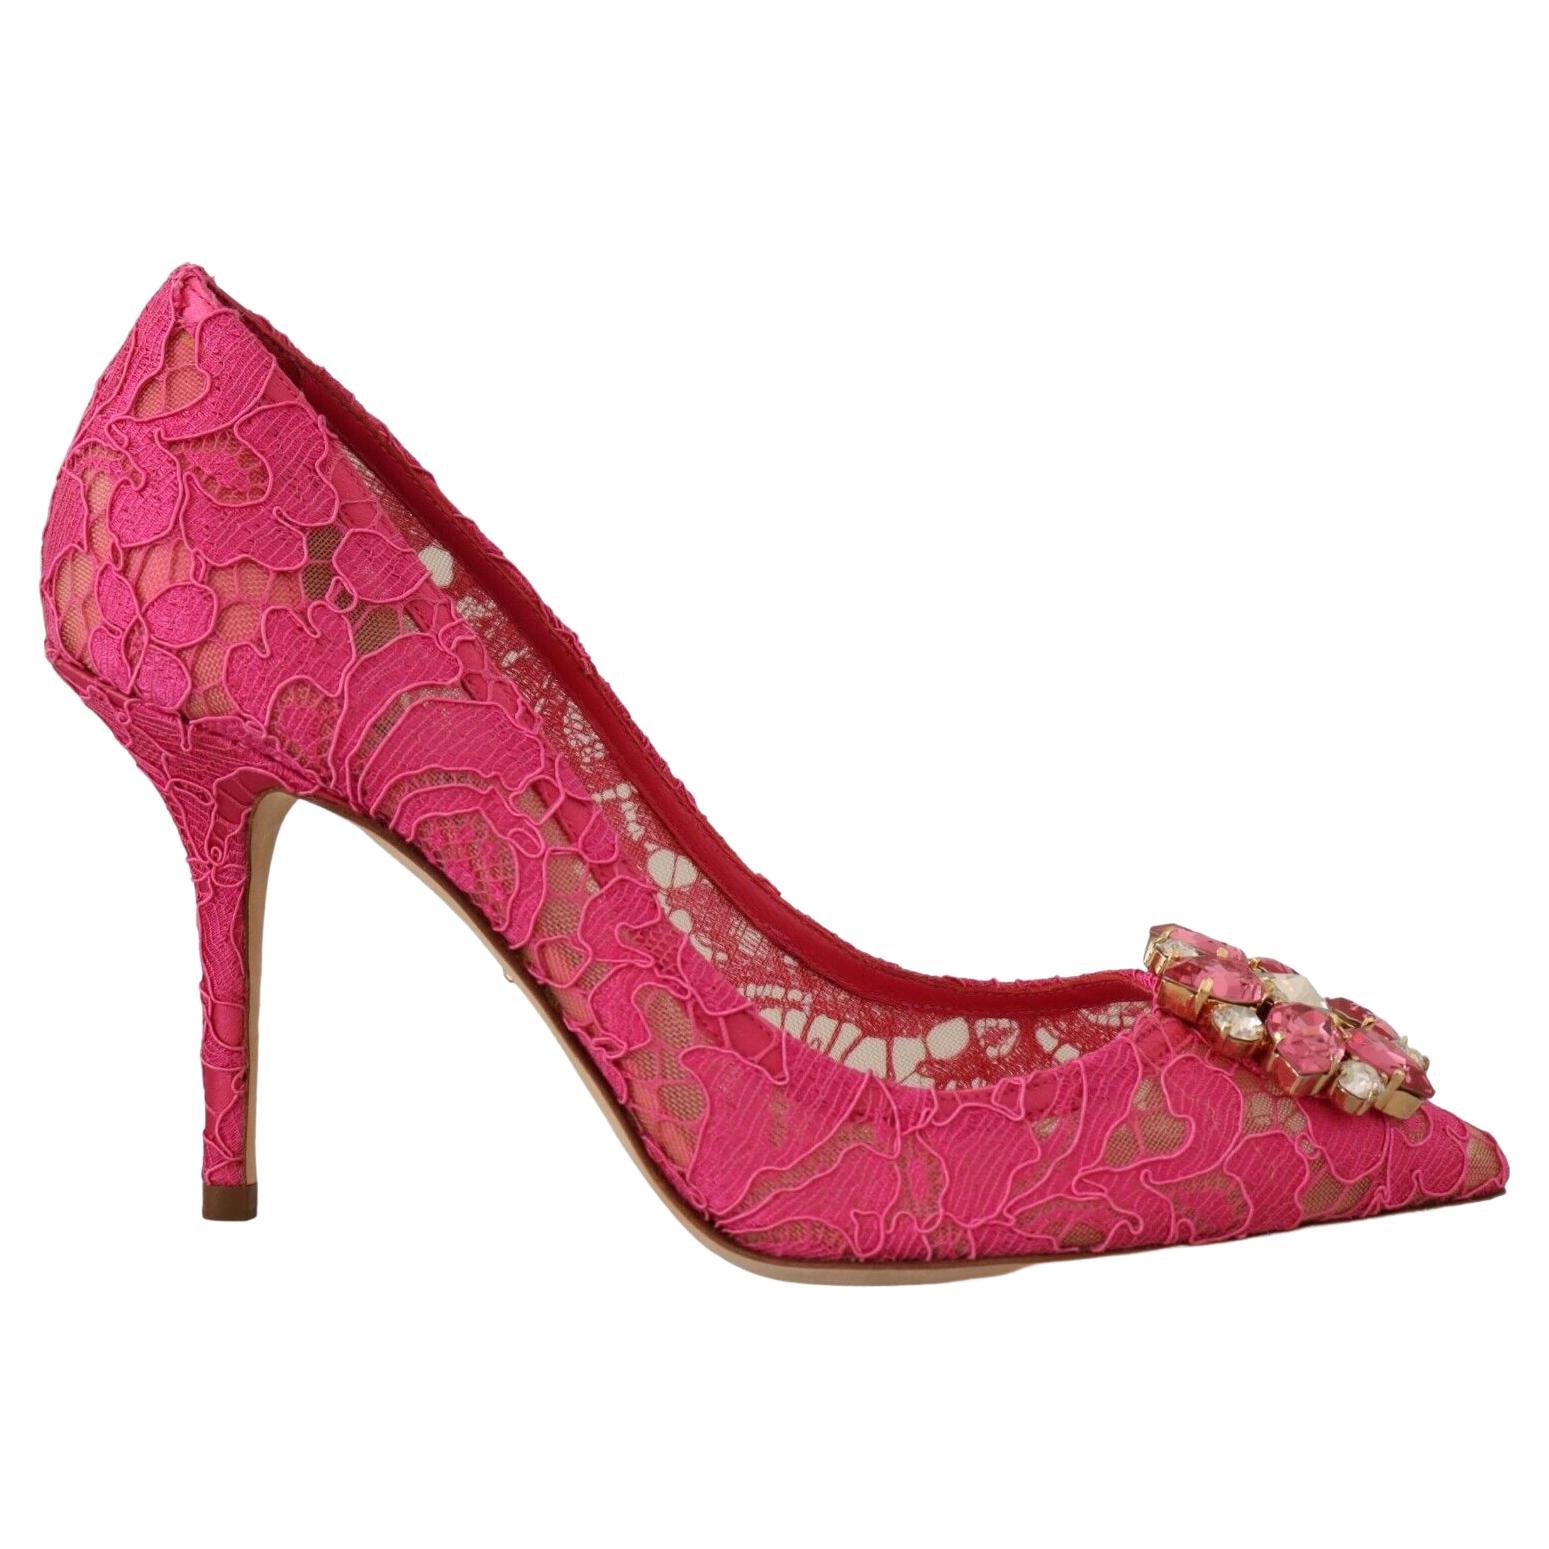 Dolce & Gabbana Pink Lace Leather Bellucci Shoes Heels Pumps Floral DG Crystals